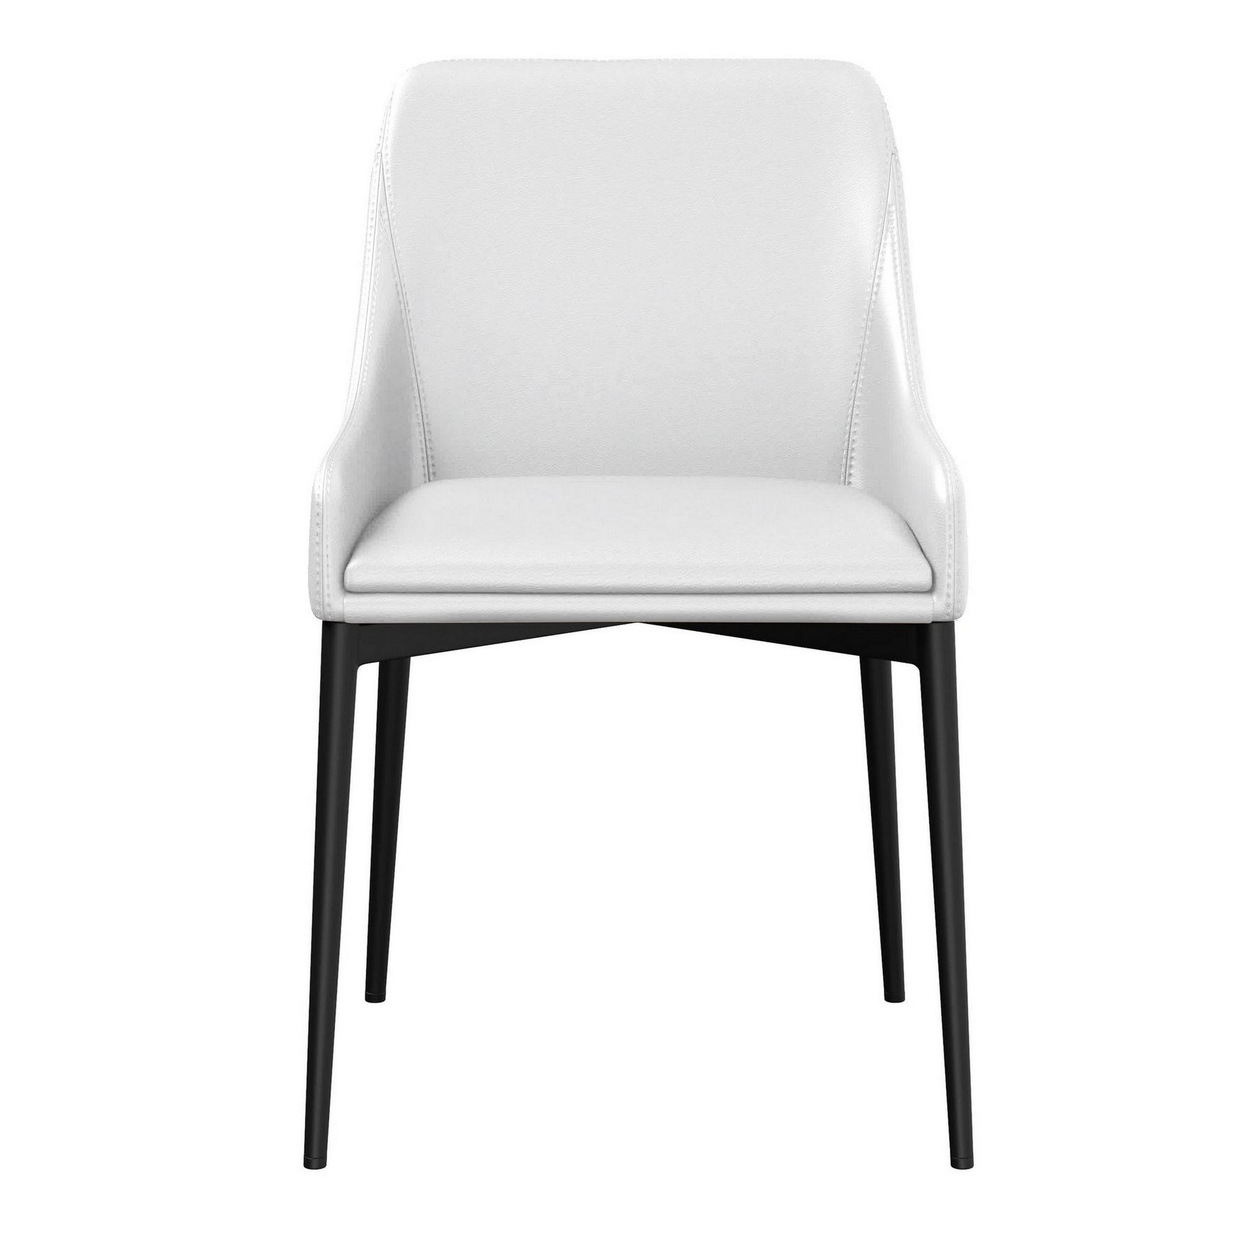 Zvi 21 Inch Cushioned Dining Chair, Set Of 2, Sloped Arms, White, Black- Saltoro Sherpi